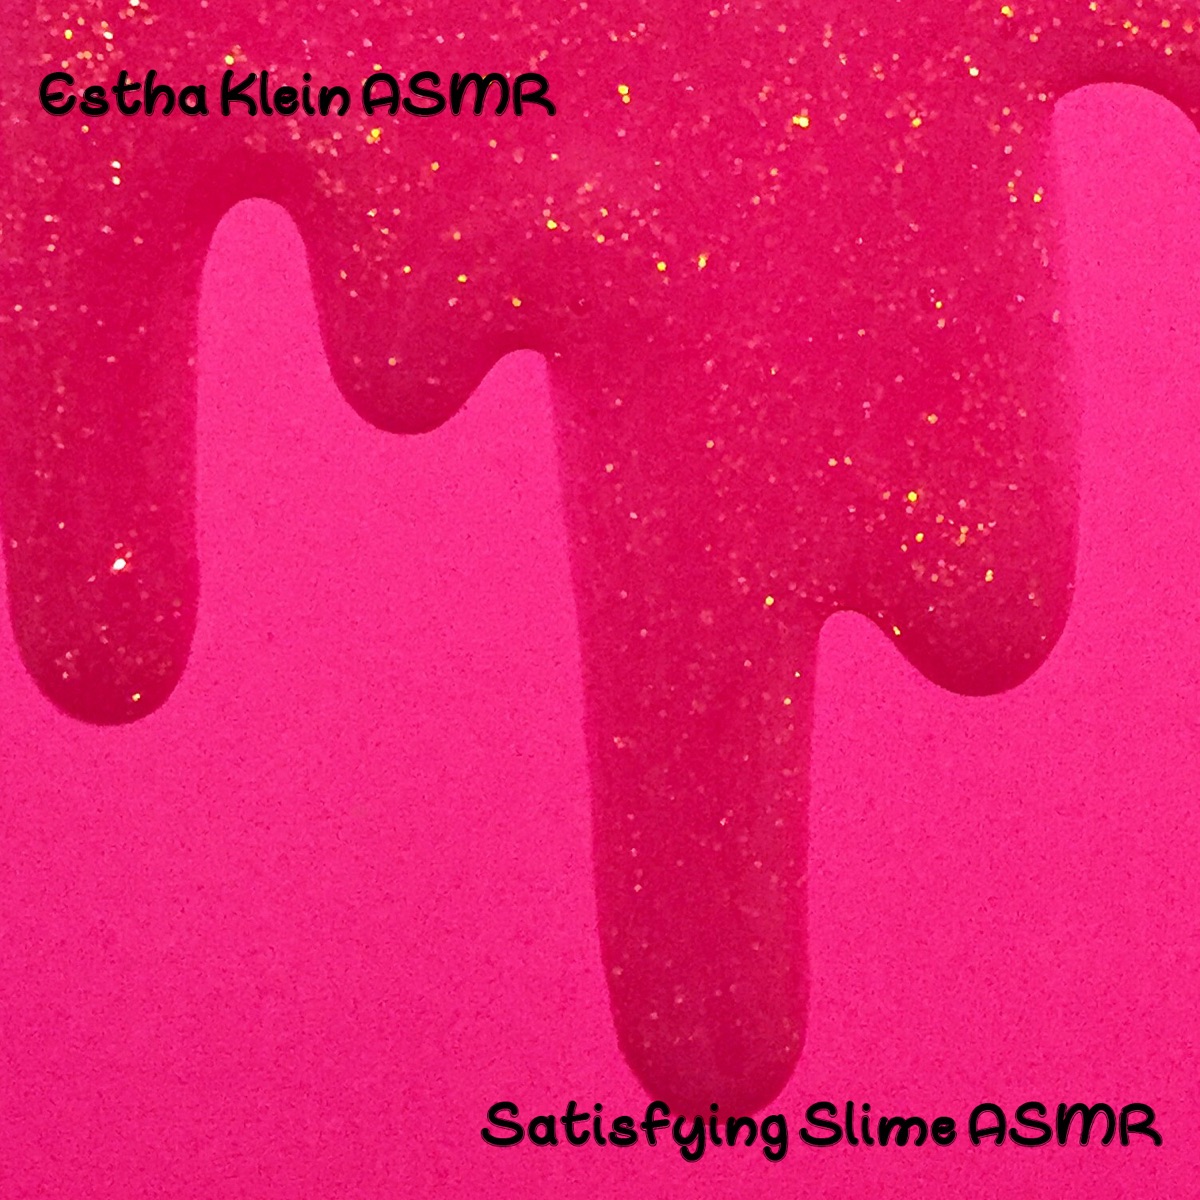 Satisfying Slime ASMR - Single - Album by Estha Klein ASMR - Apple